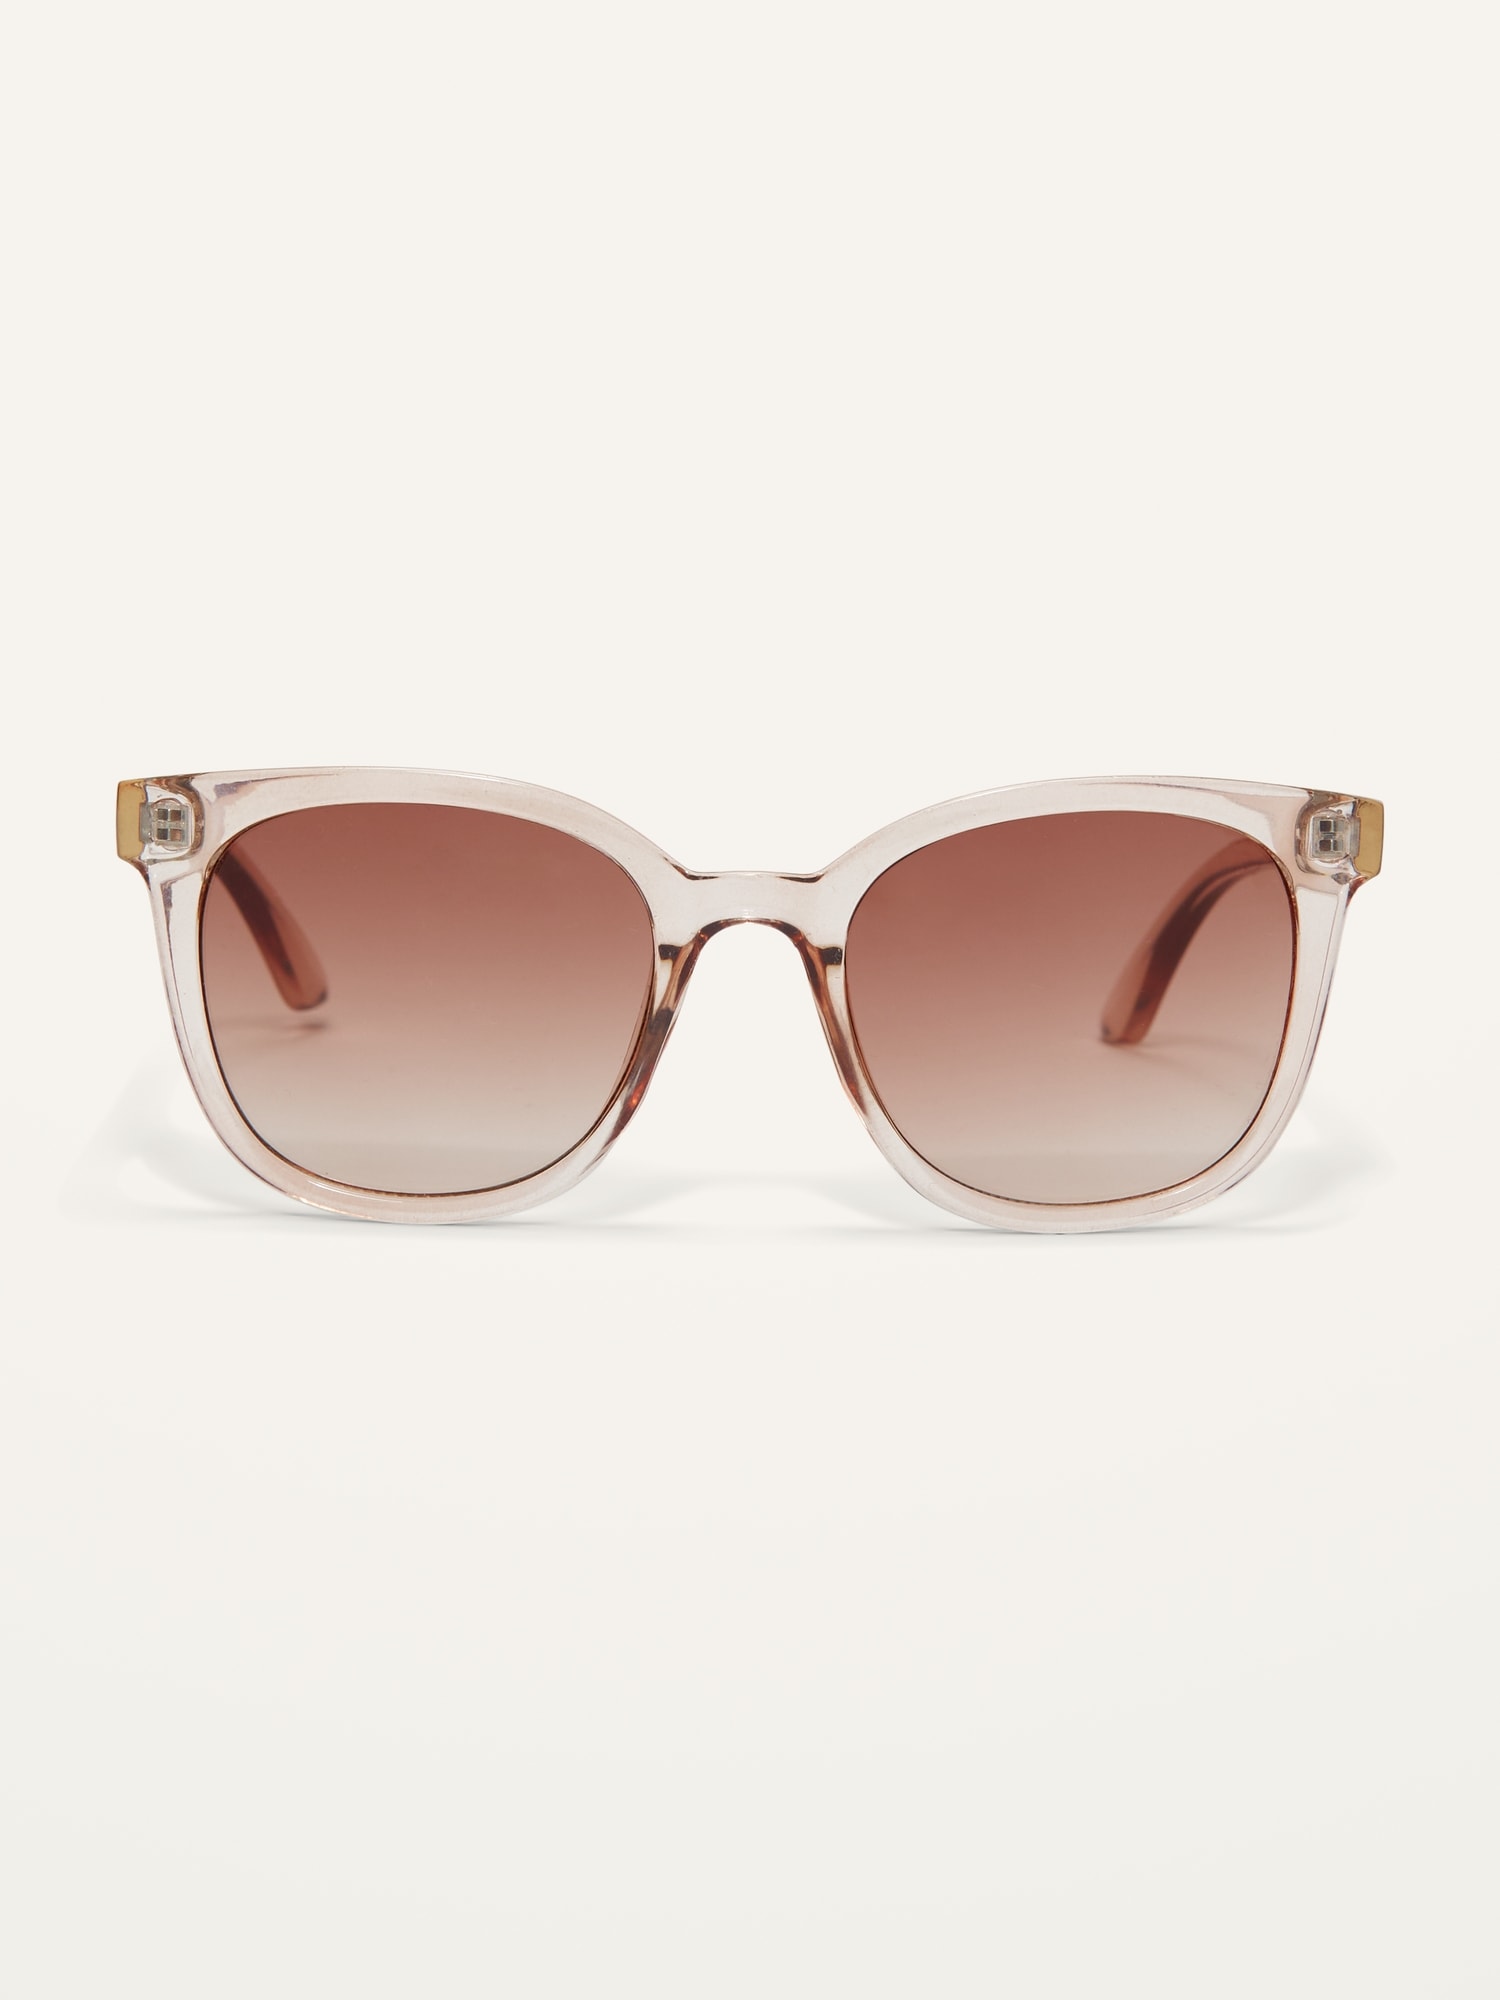 Old Navy Gold Sunglasses for Women | Mercari